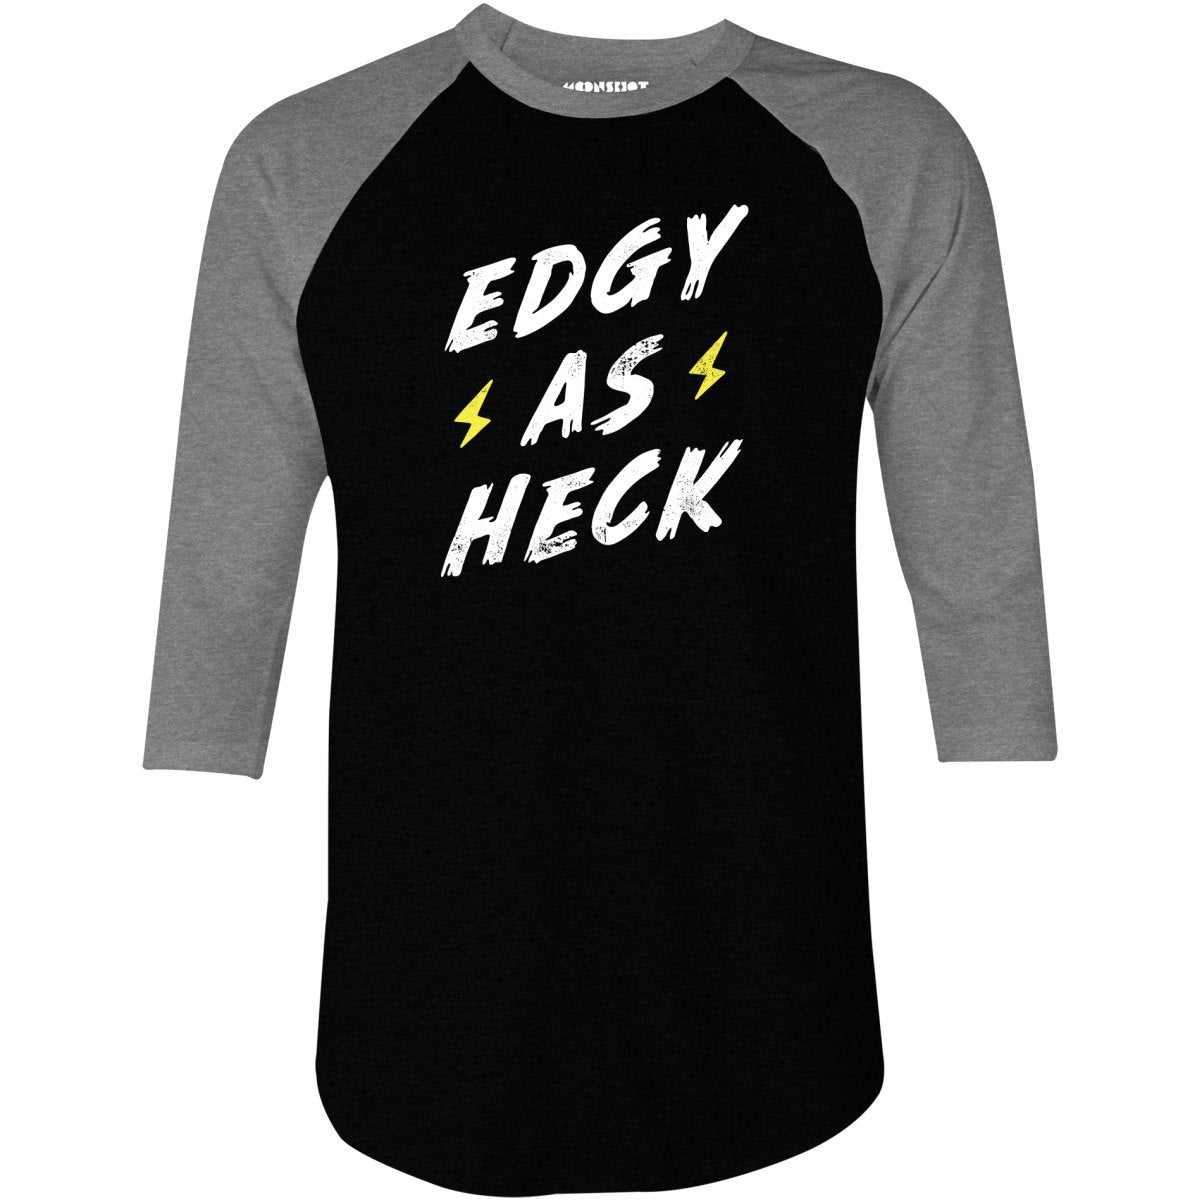 Edgy as Heck - 3/4 Sleeve Raglan T-Shirt